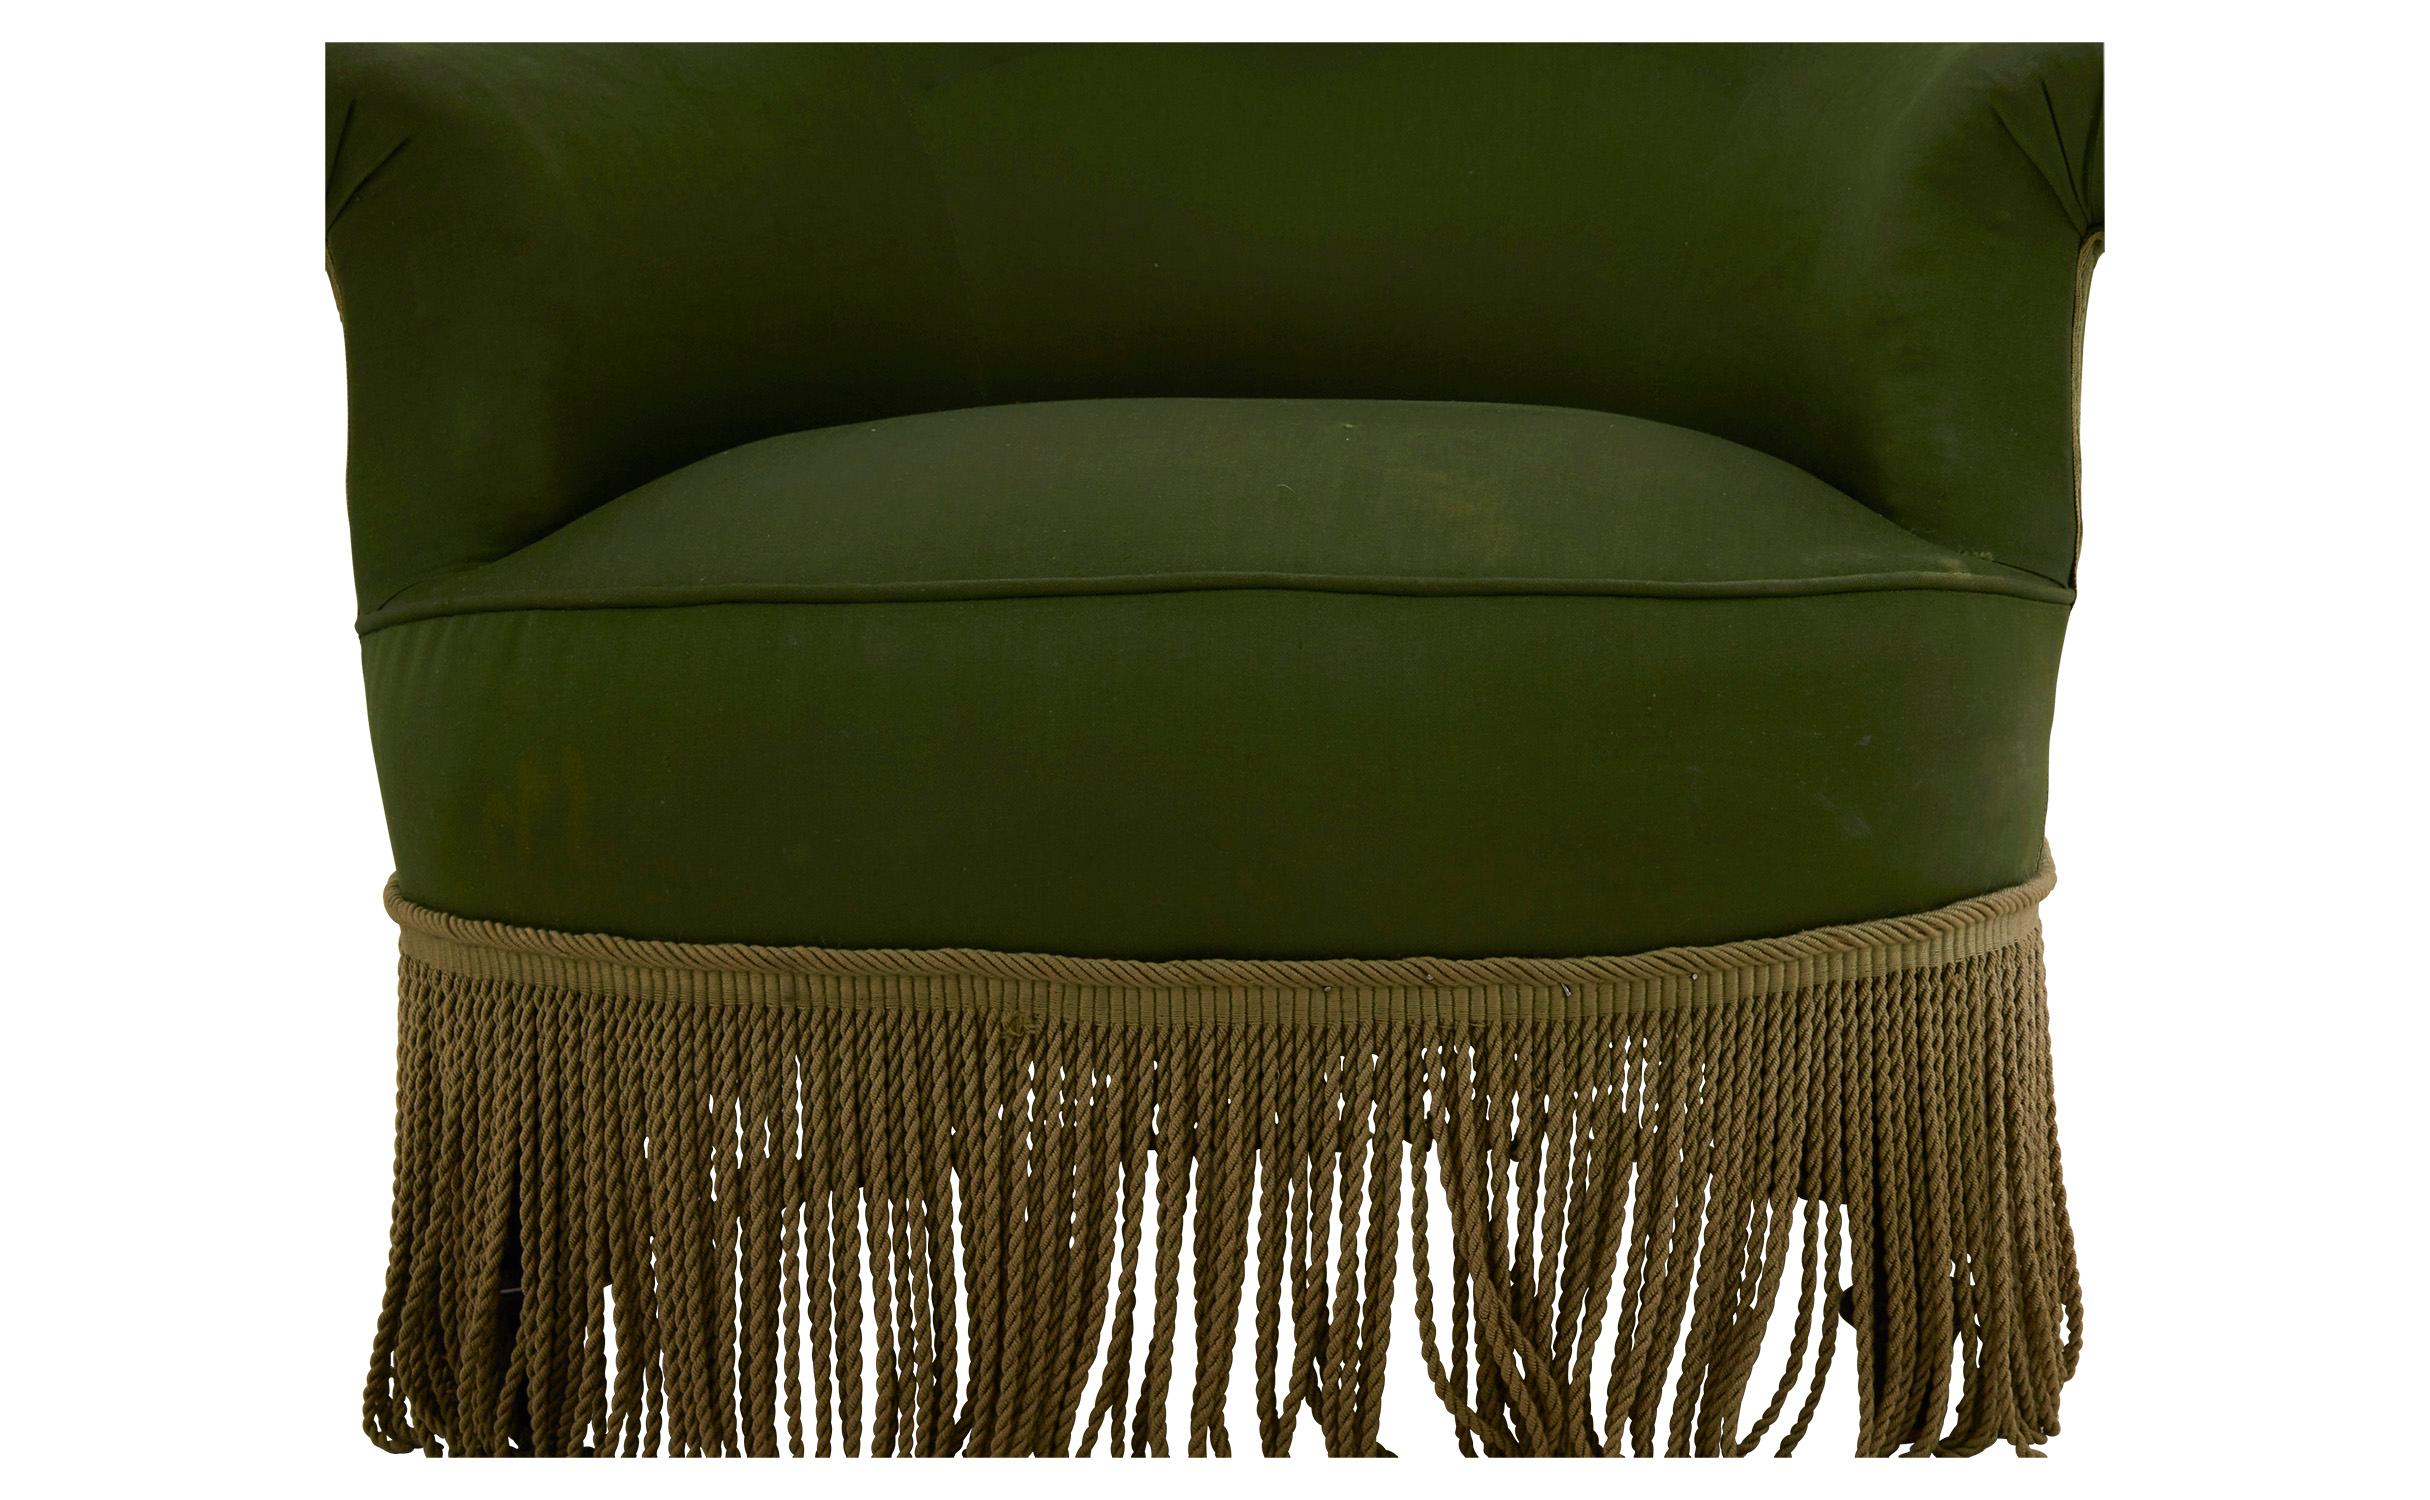 19th Century French Napoleon Green Armchair with Bullion Fringe